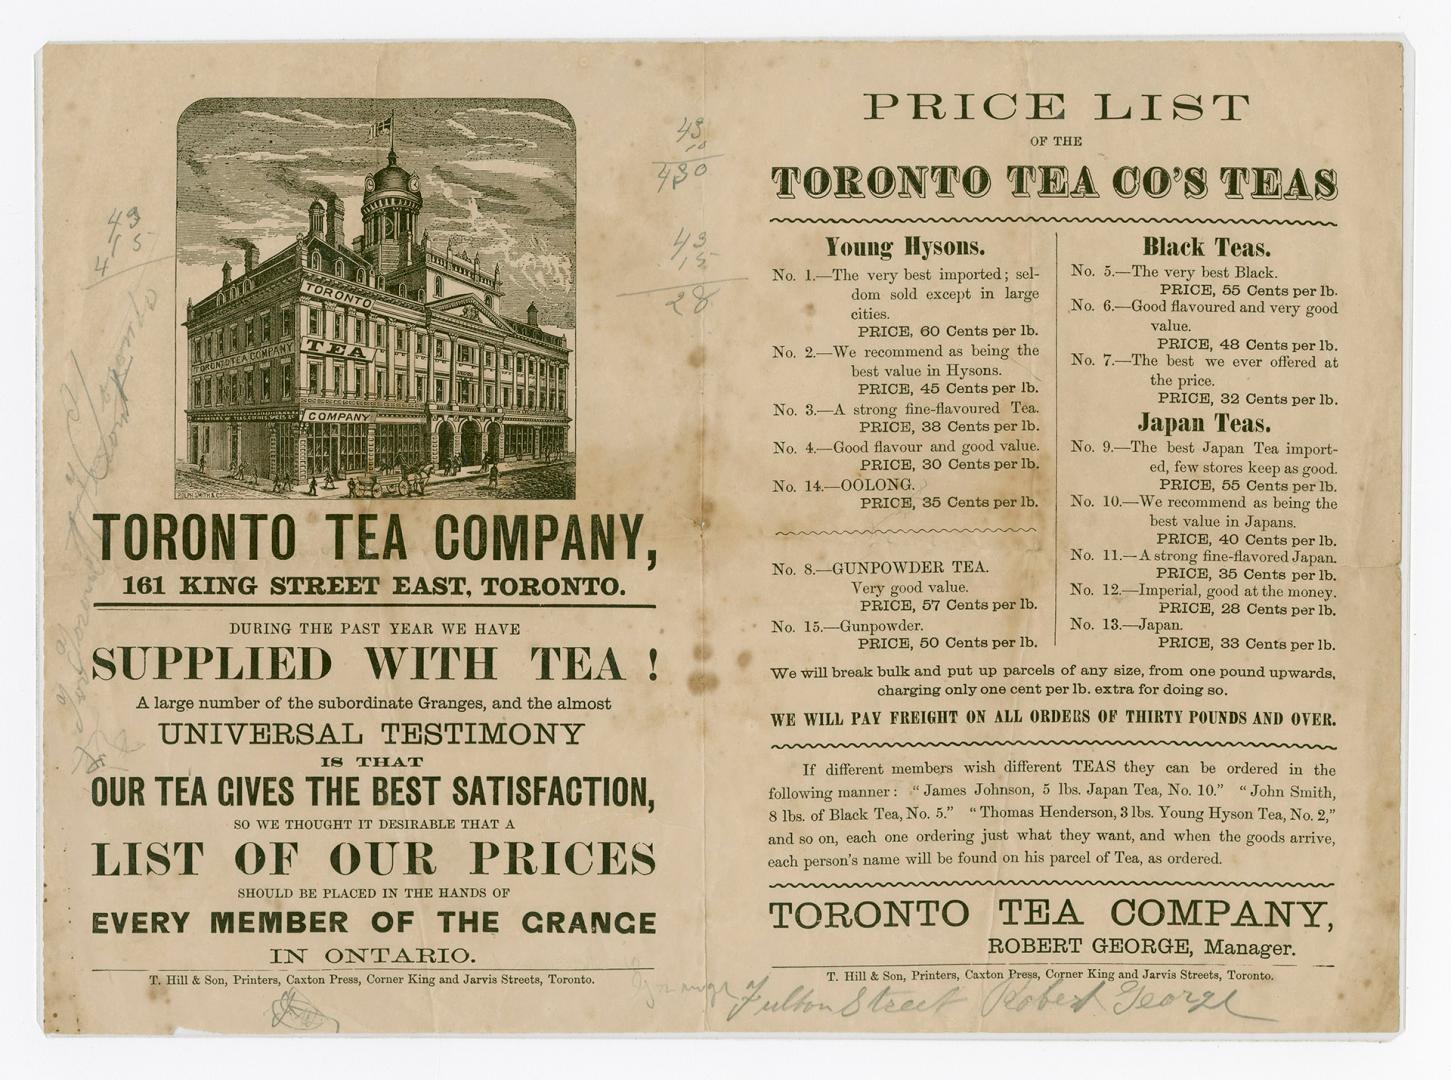 Price list of the Toronto Tea Co's teas